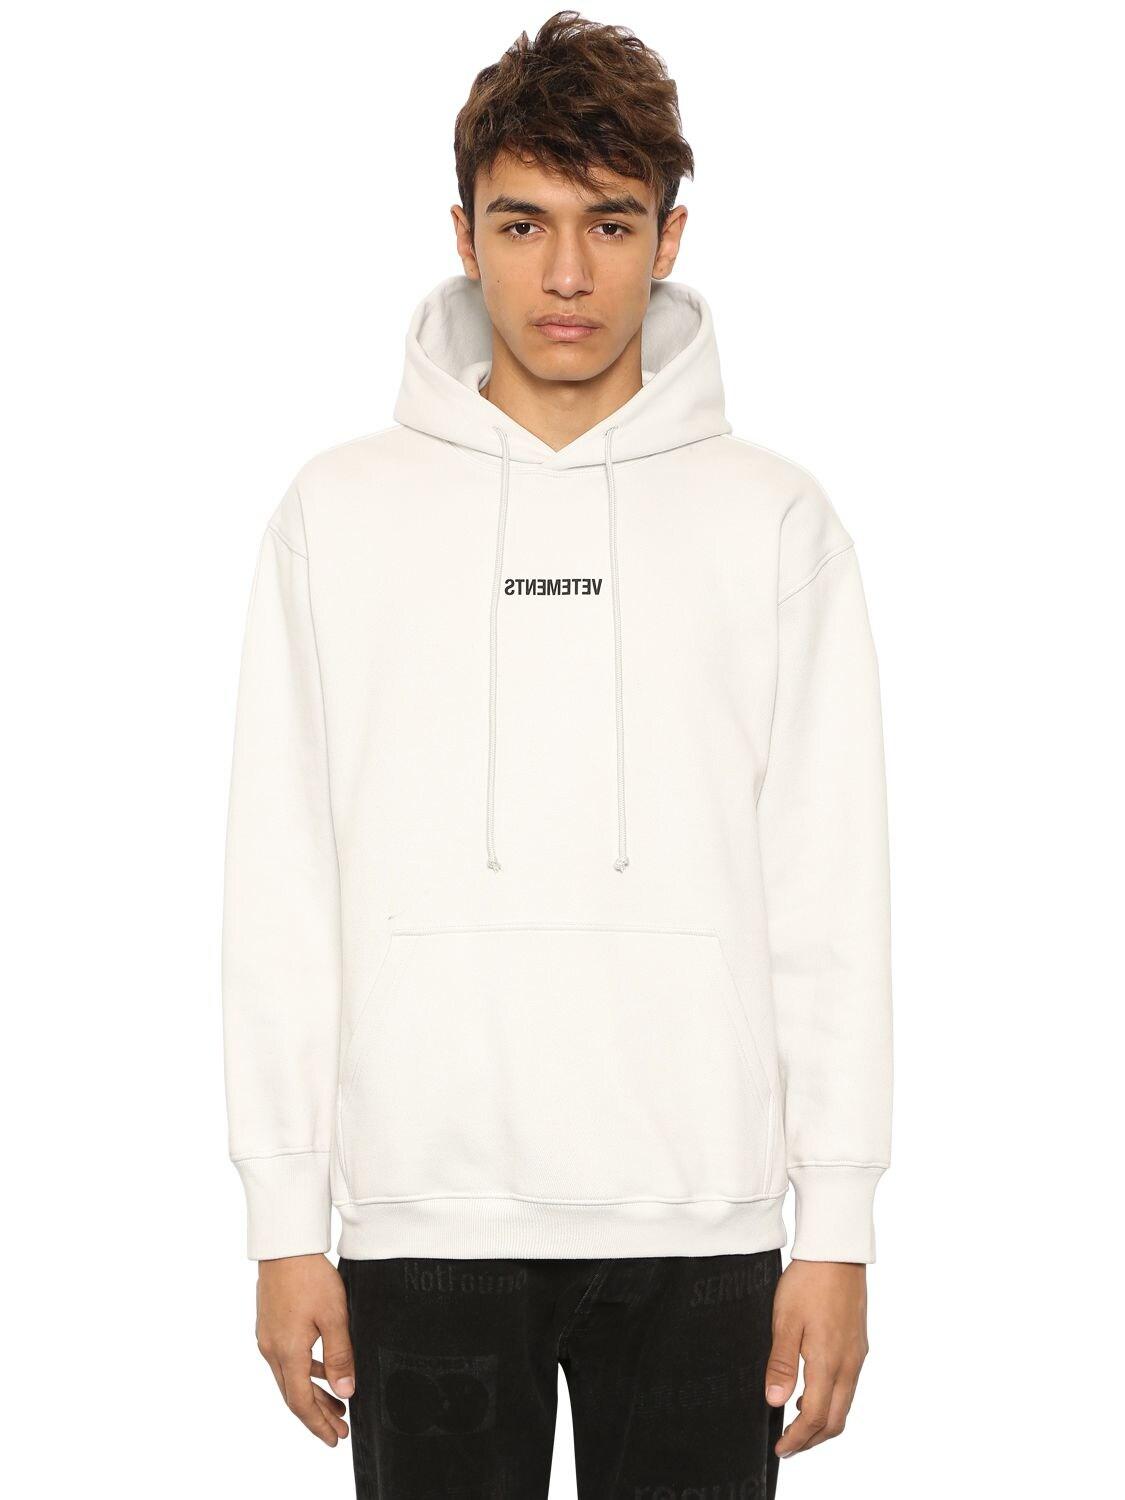 Vetements Oversize Reverse Logo Sweatshirt Hoodie in White for Men - Lyst